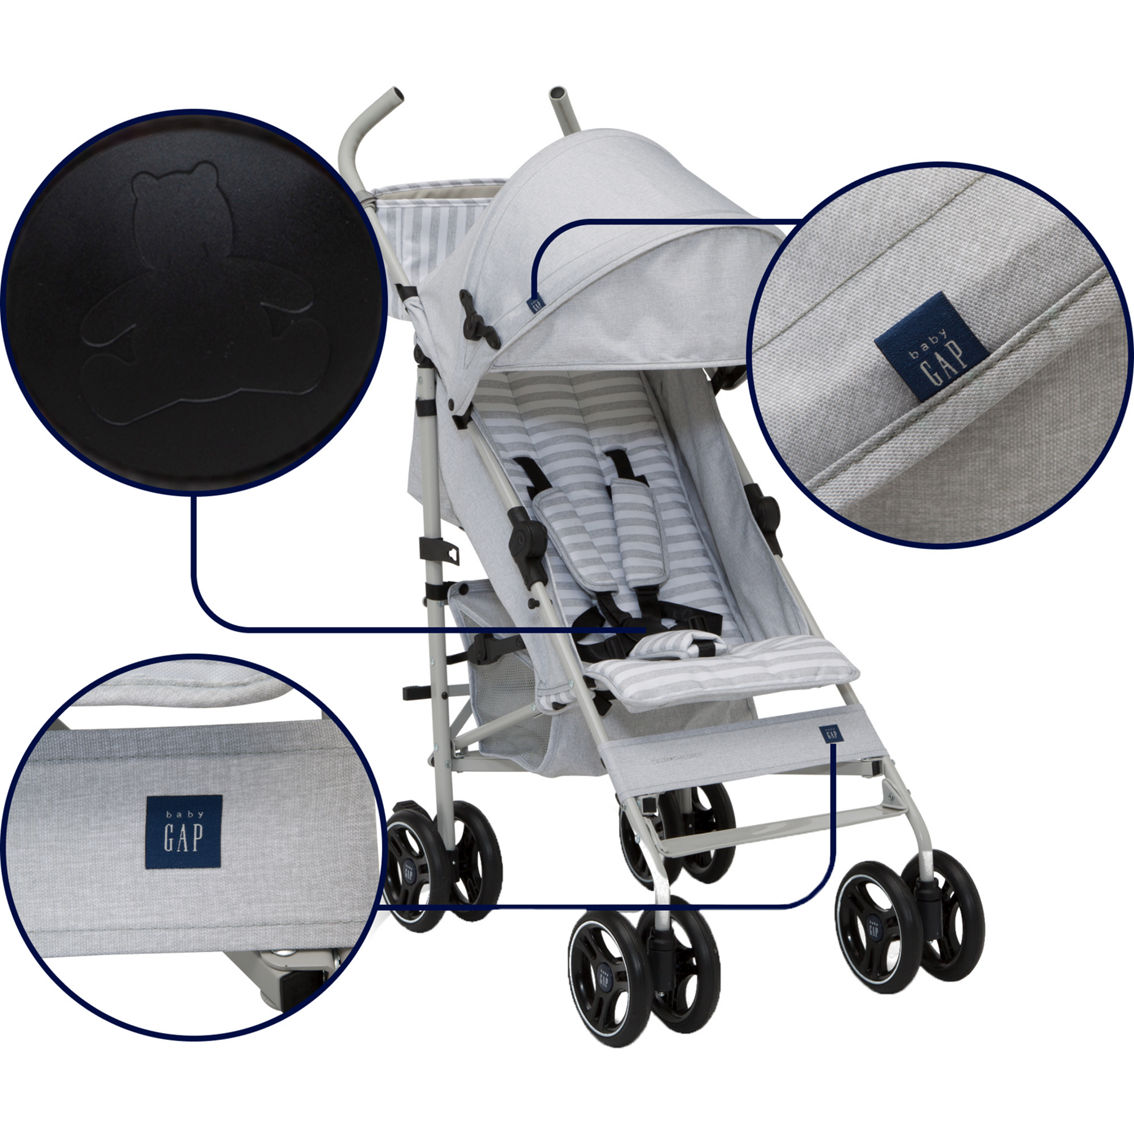 Delta Children babyGap Classic Stroller - Image 2 of 9